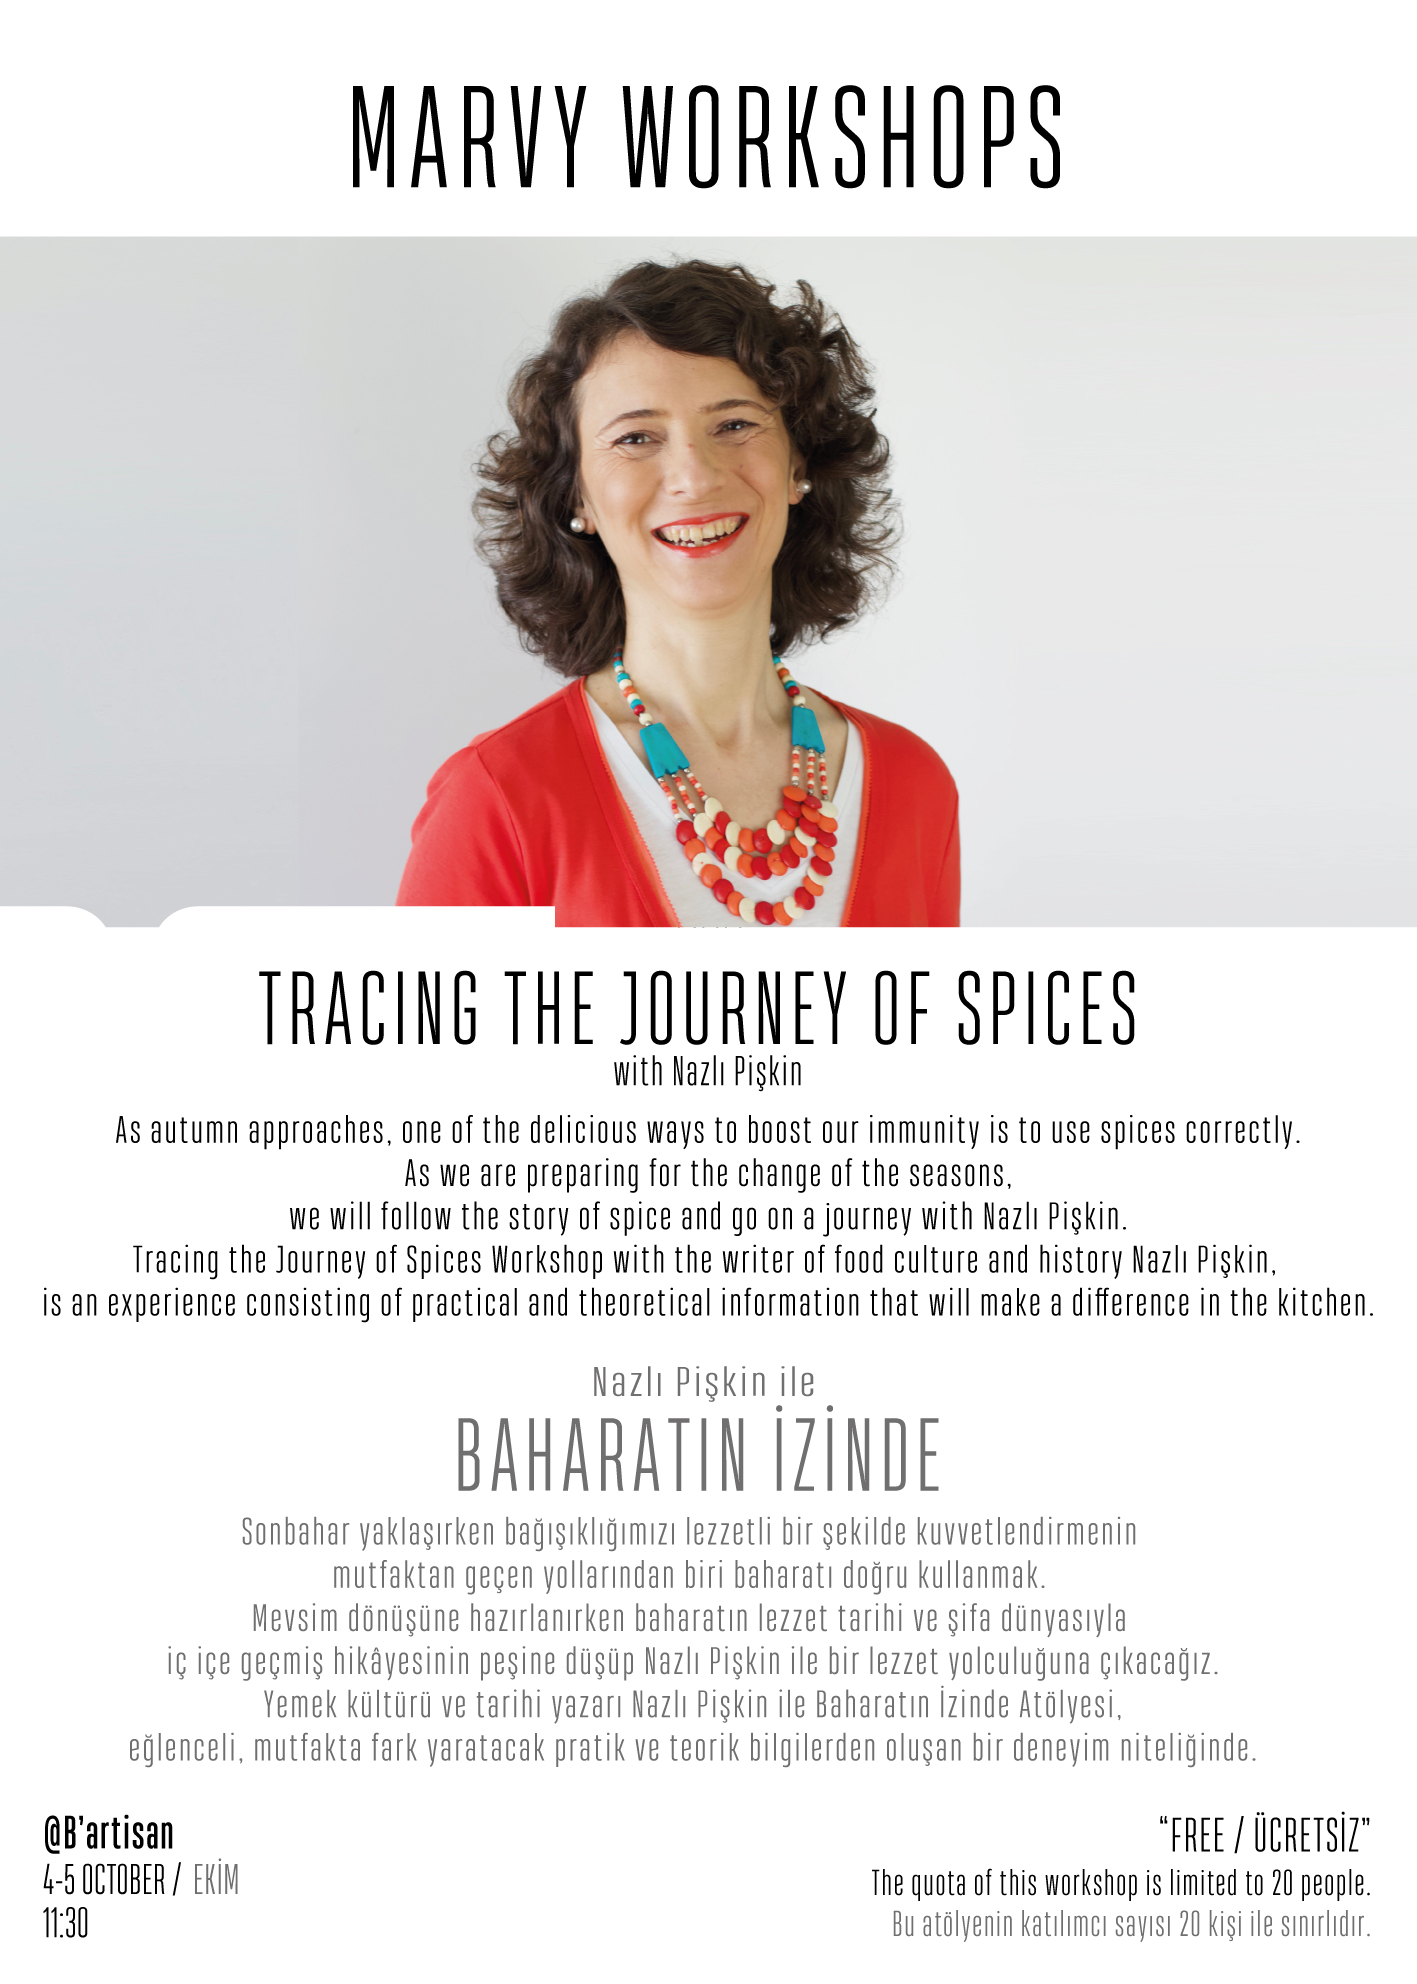  Tracing the Journey of Spices with Nazlı Pişkin